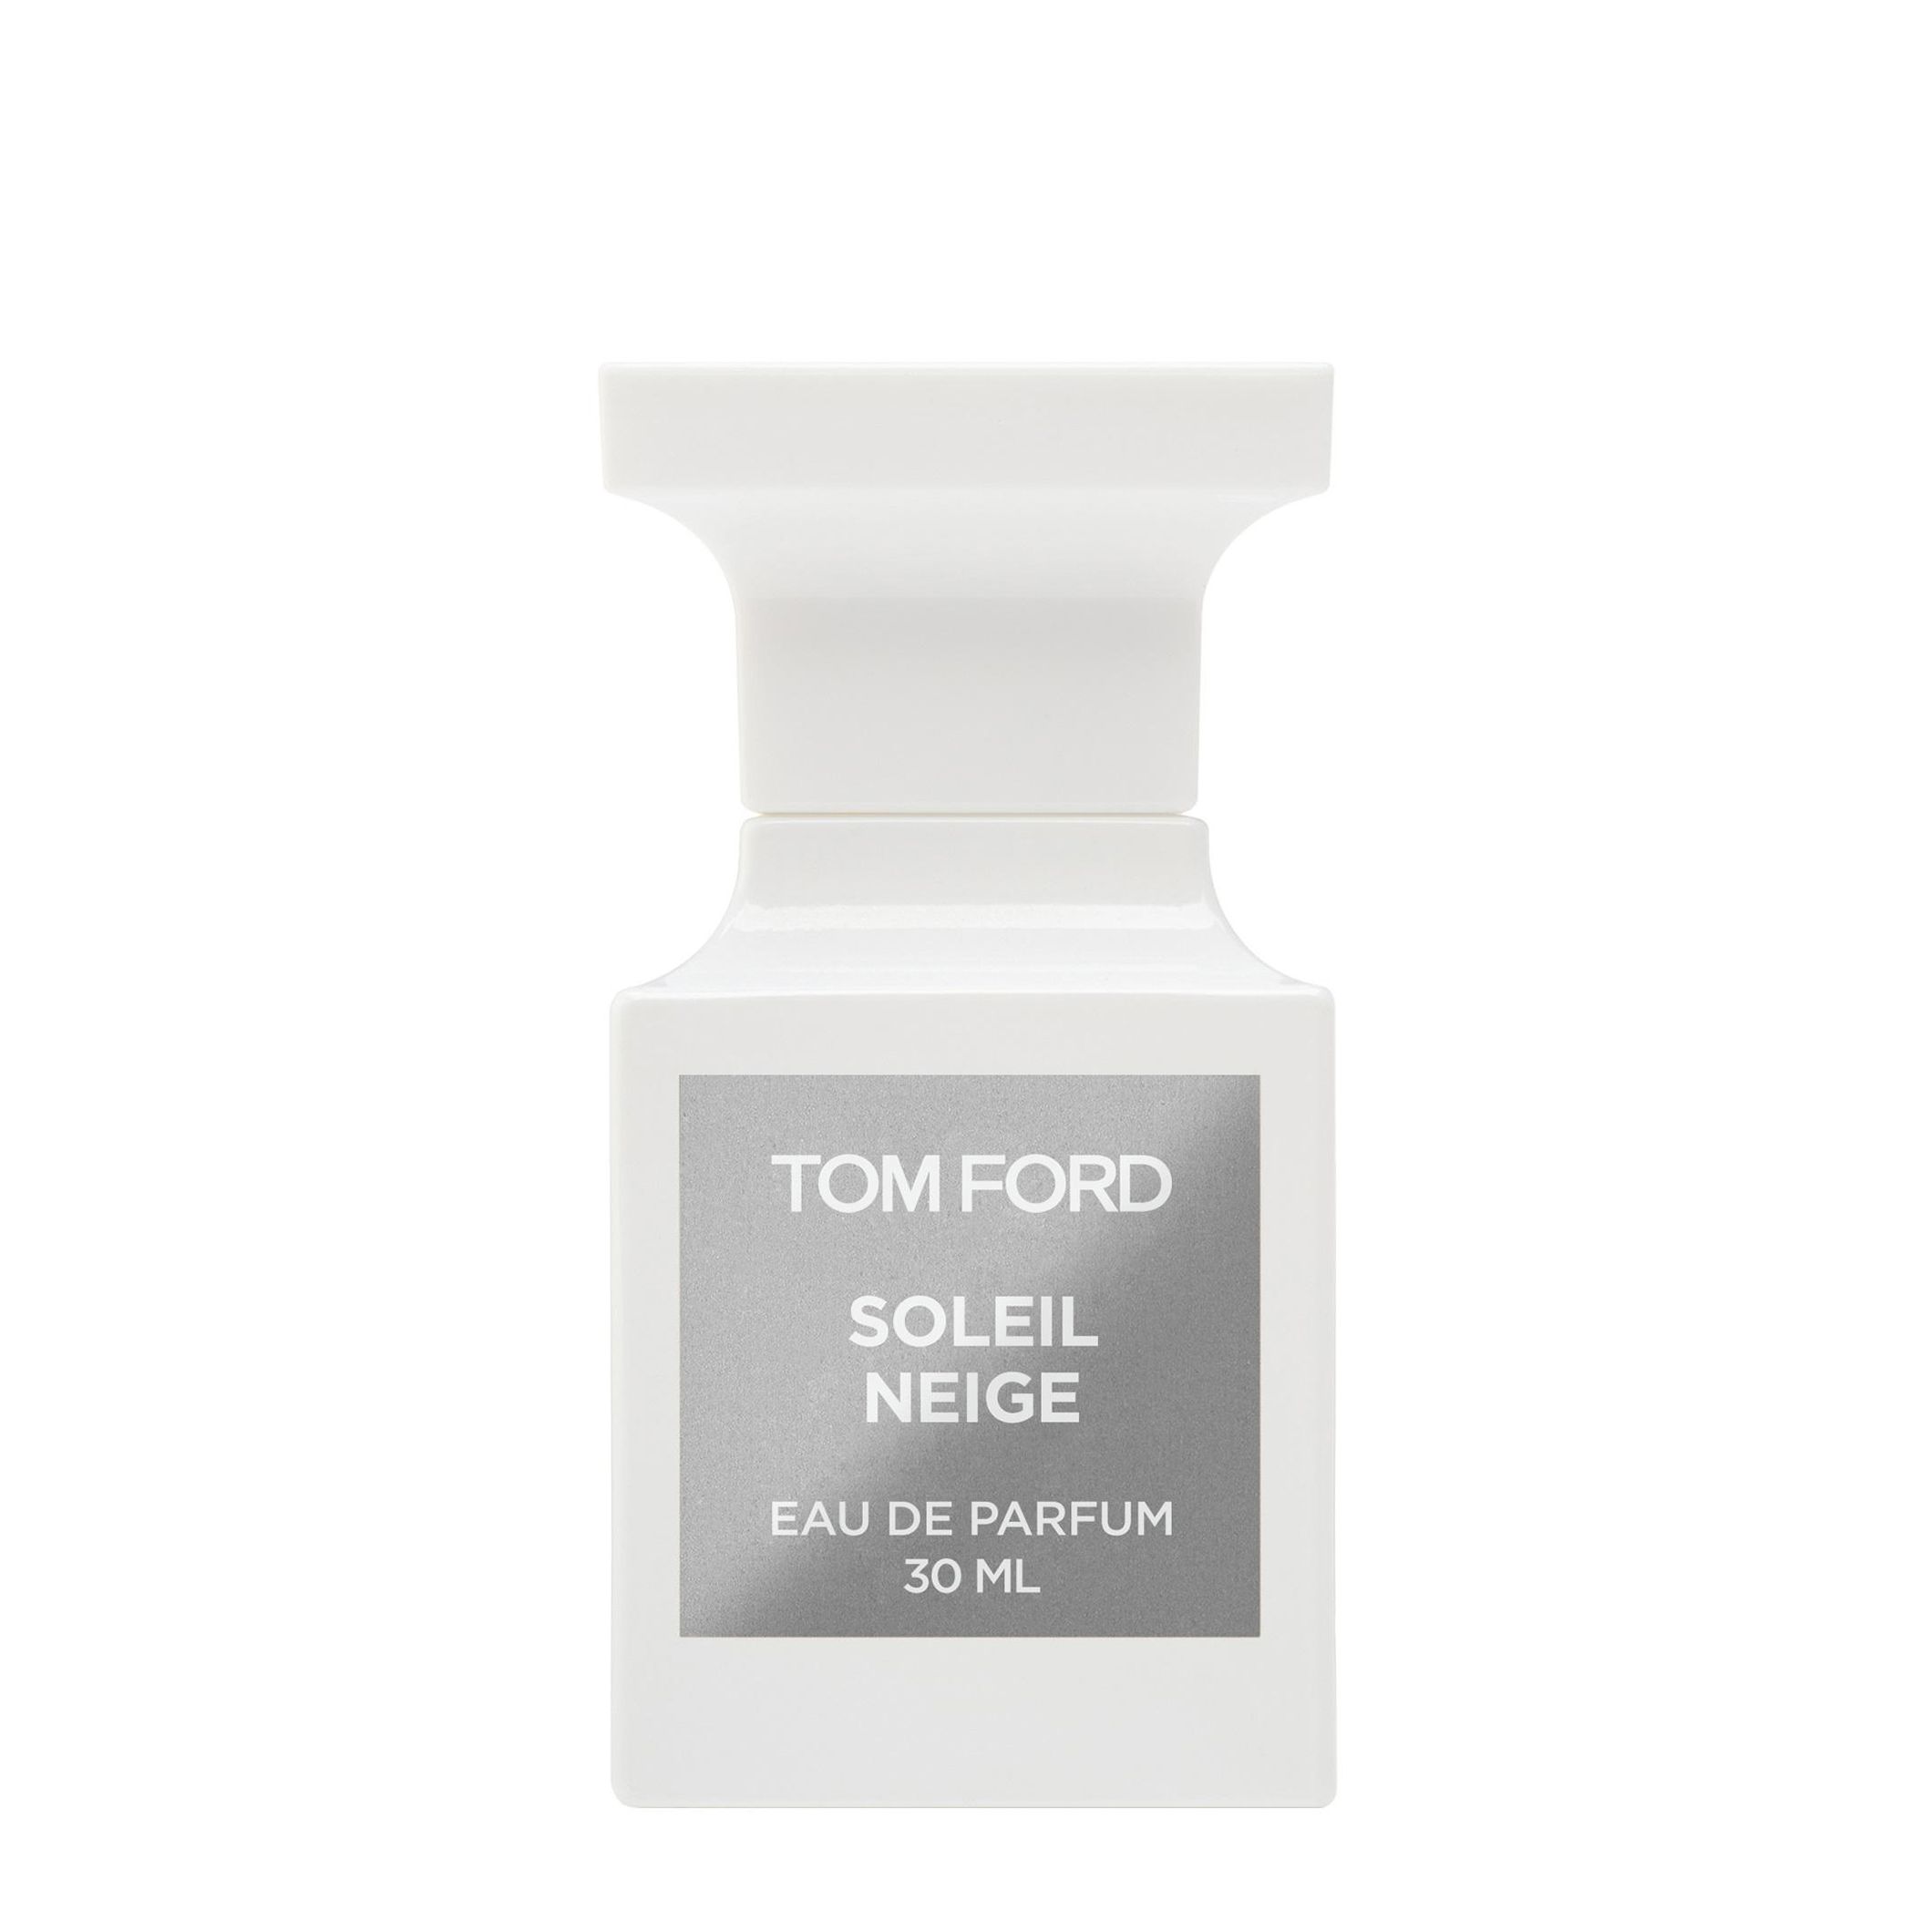 Вода парфюмерная Tom Ford Soleil Neige, унисекс, 30 мл tom ford soleil neige 100